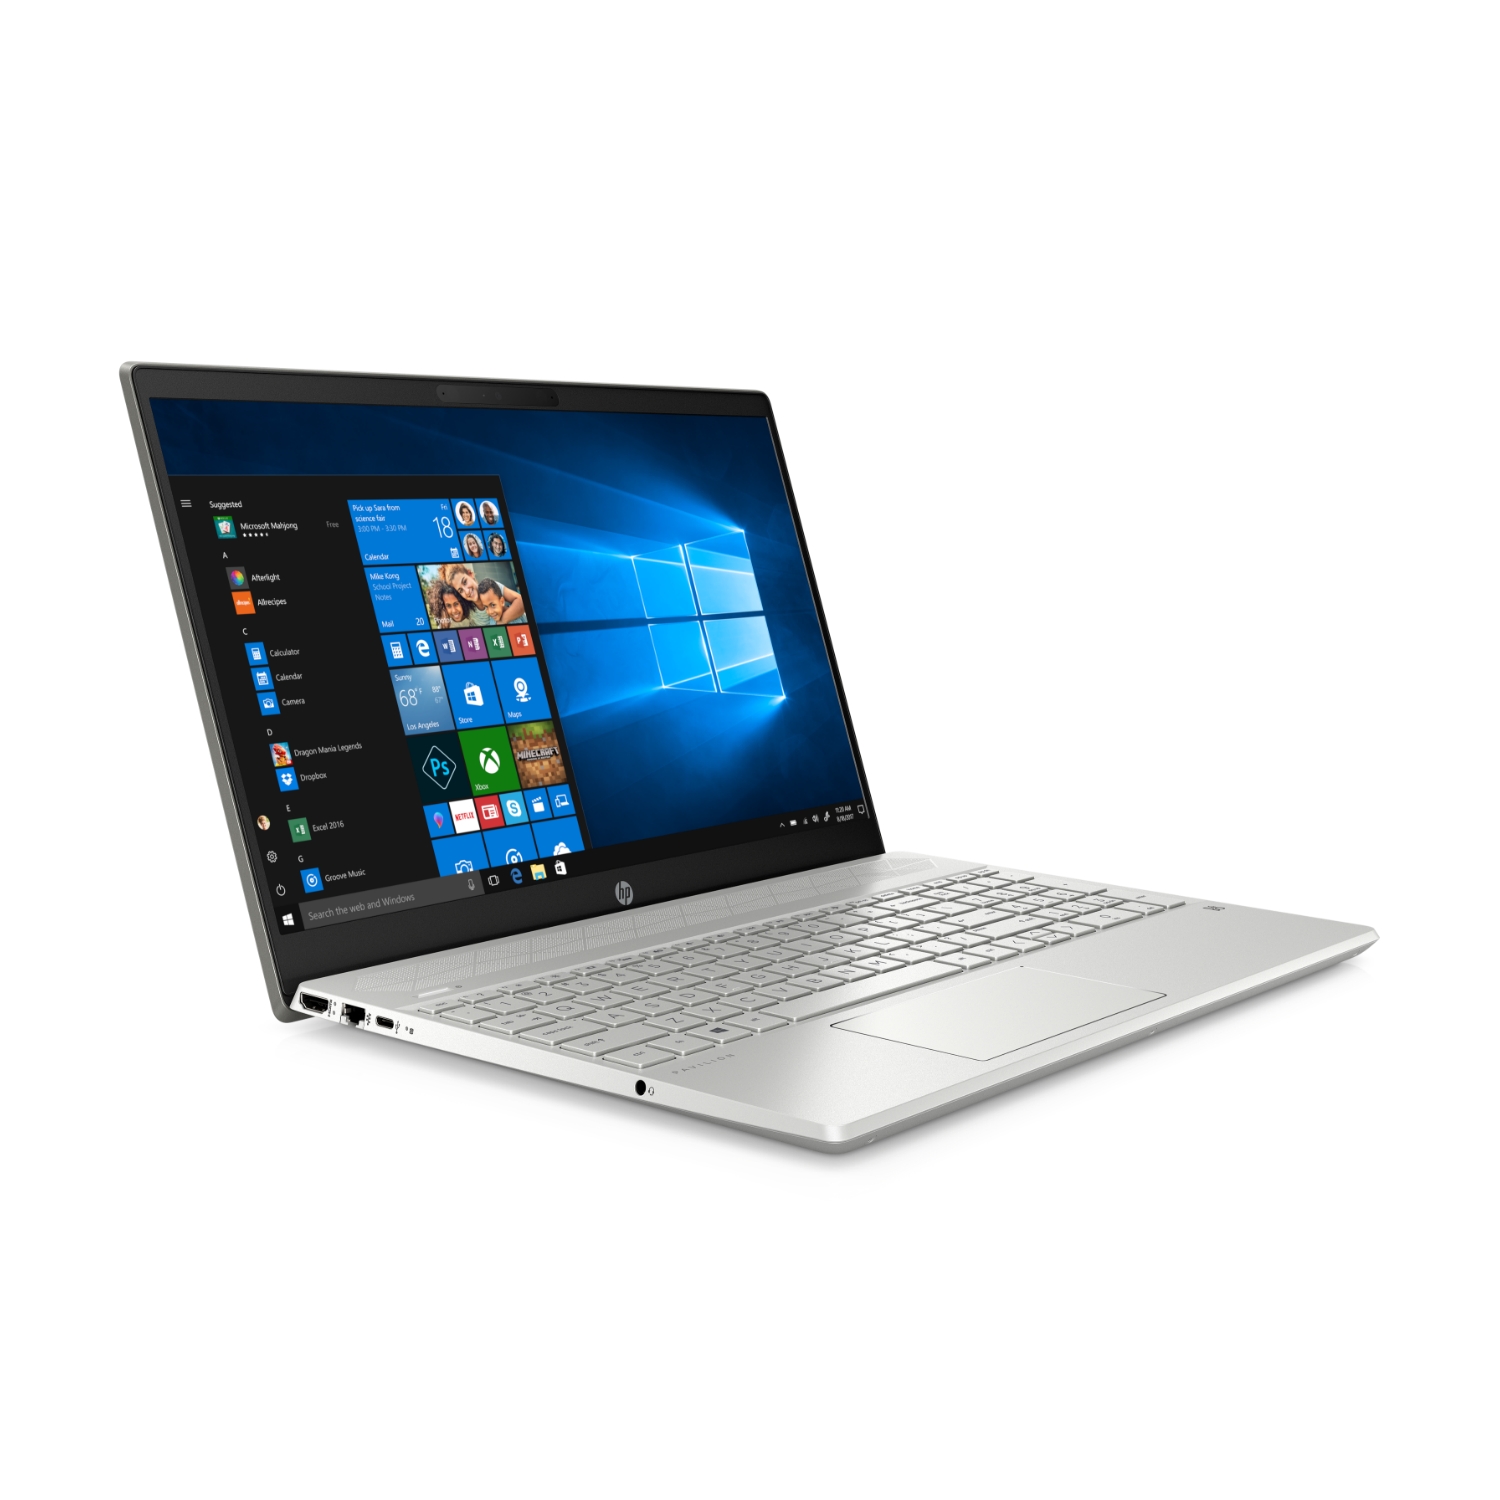 Laptop HP Pavilion i5-8265U 8GB RAM + 256GB SSD NVIDIA GTX 1050 3GB 15.6" Win10 Home